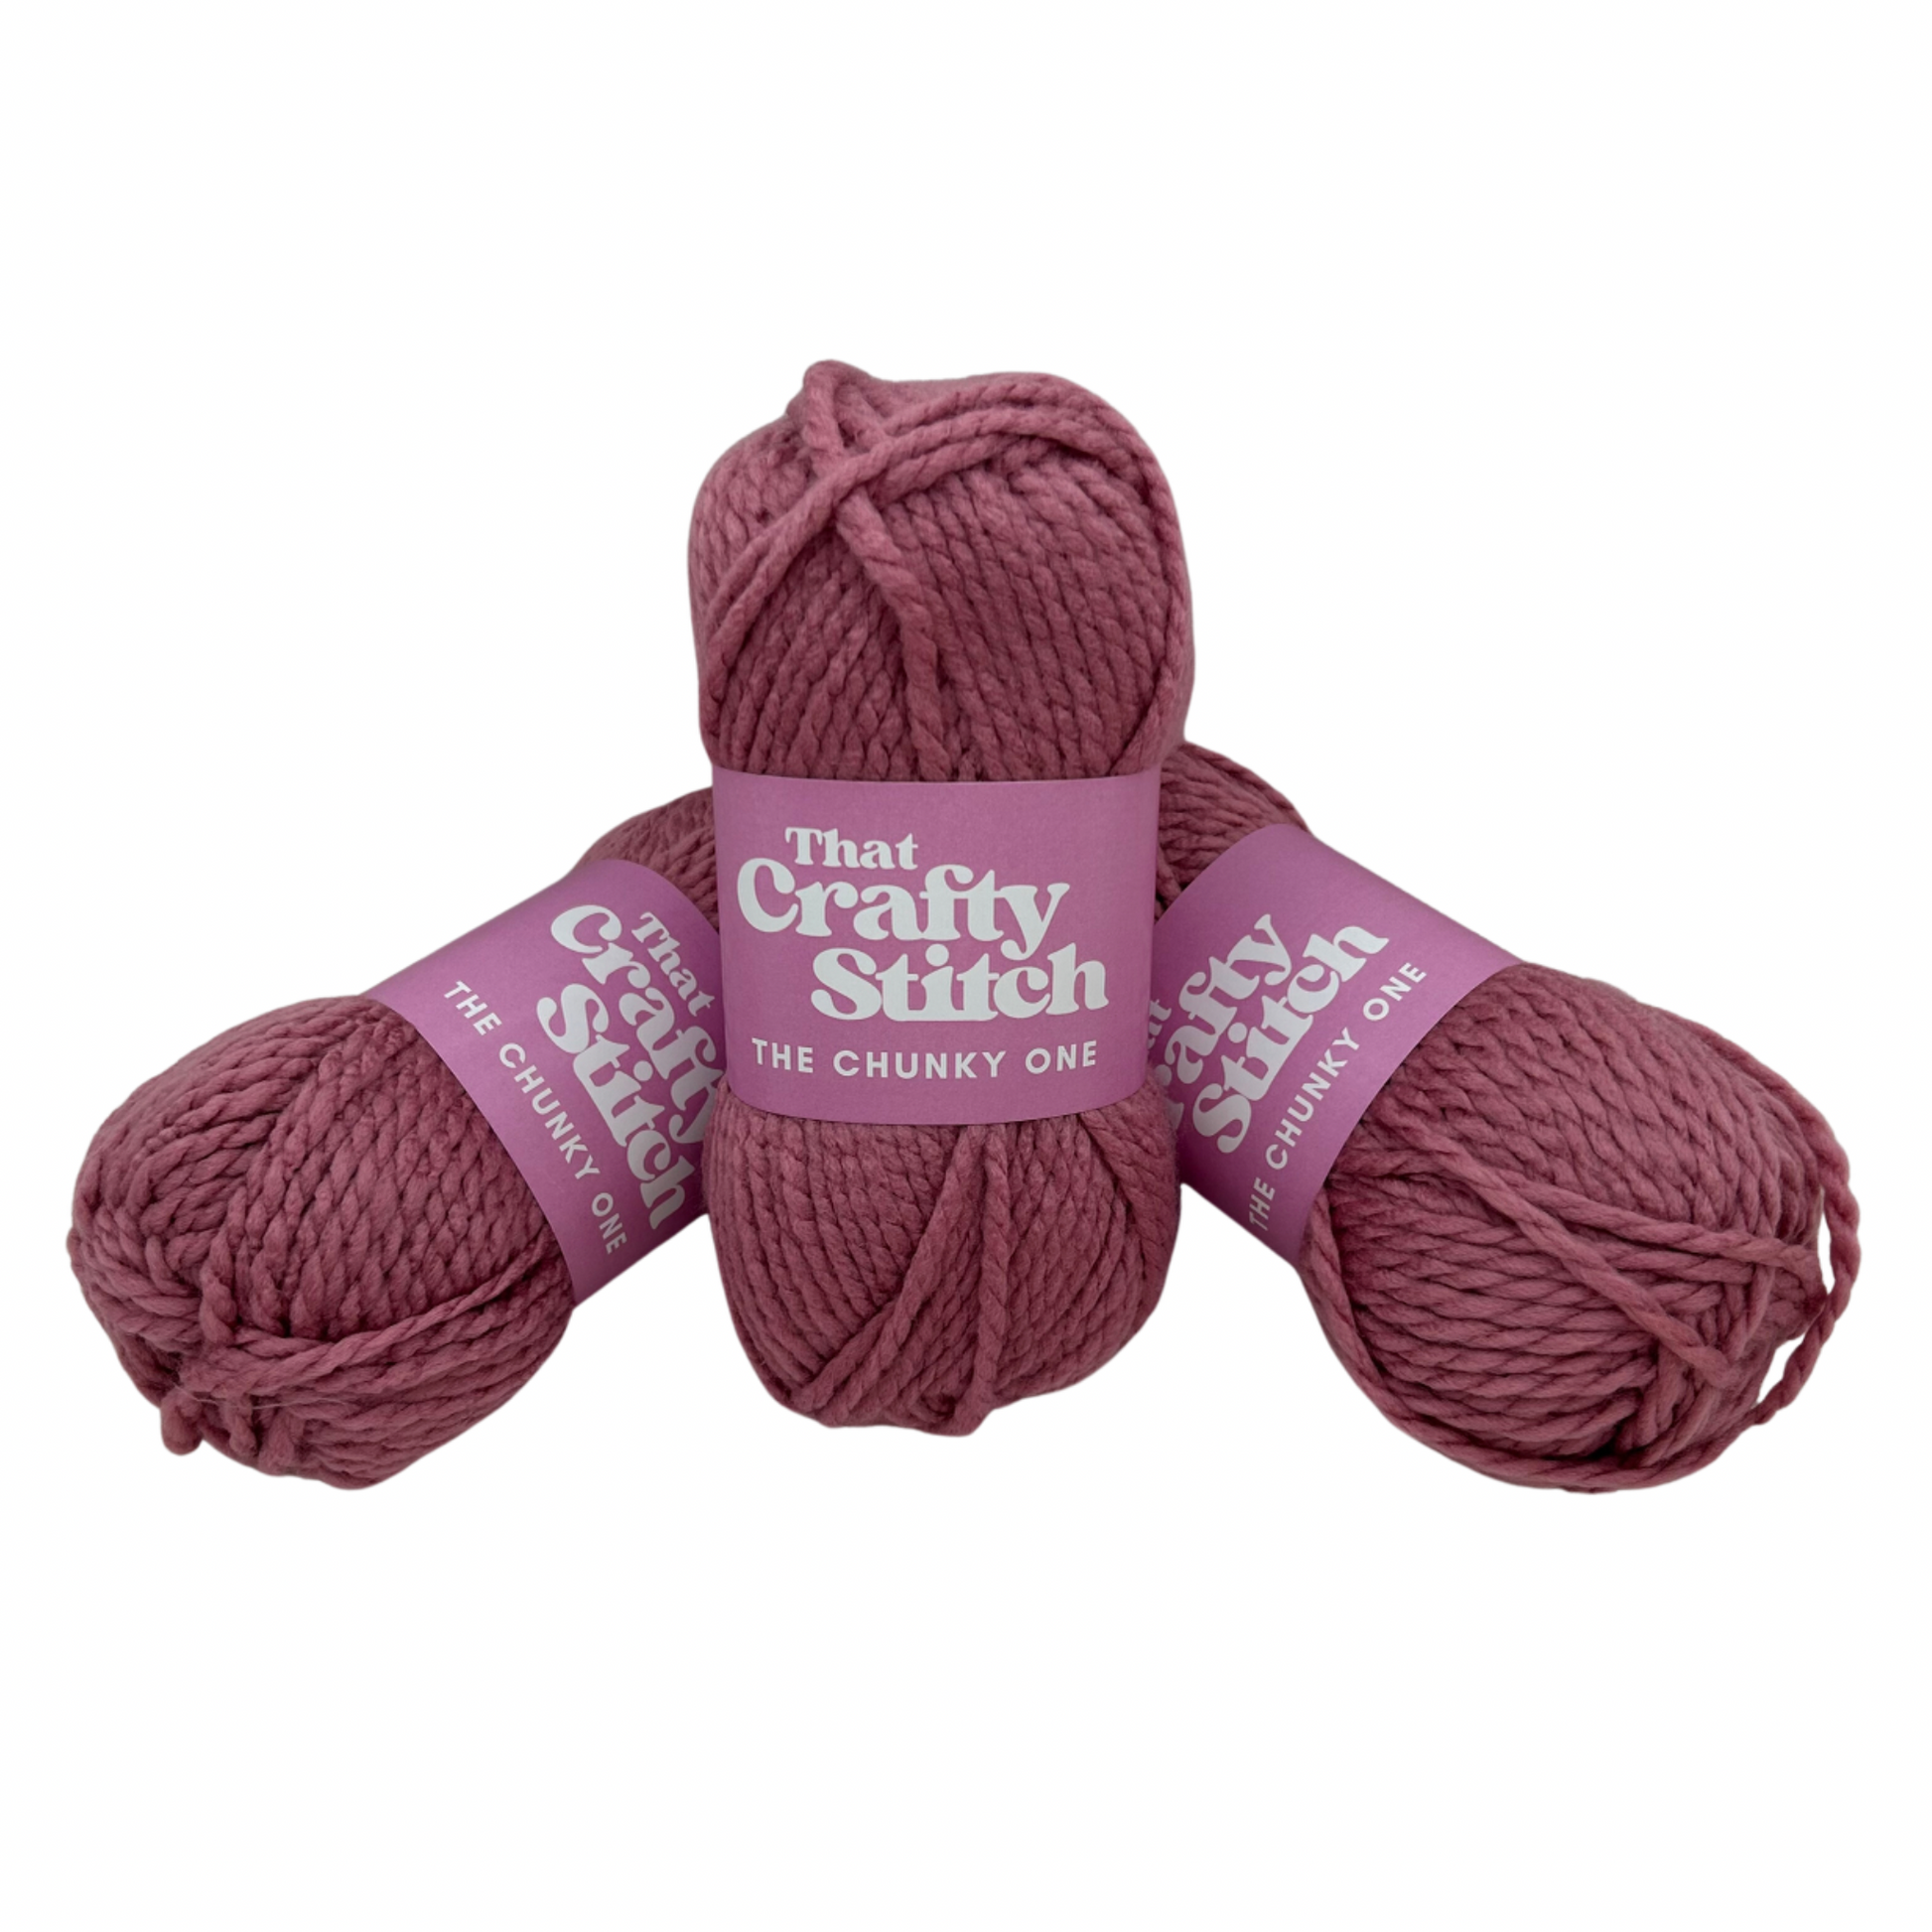 Dusky pink super chunky yarn